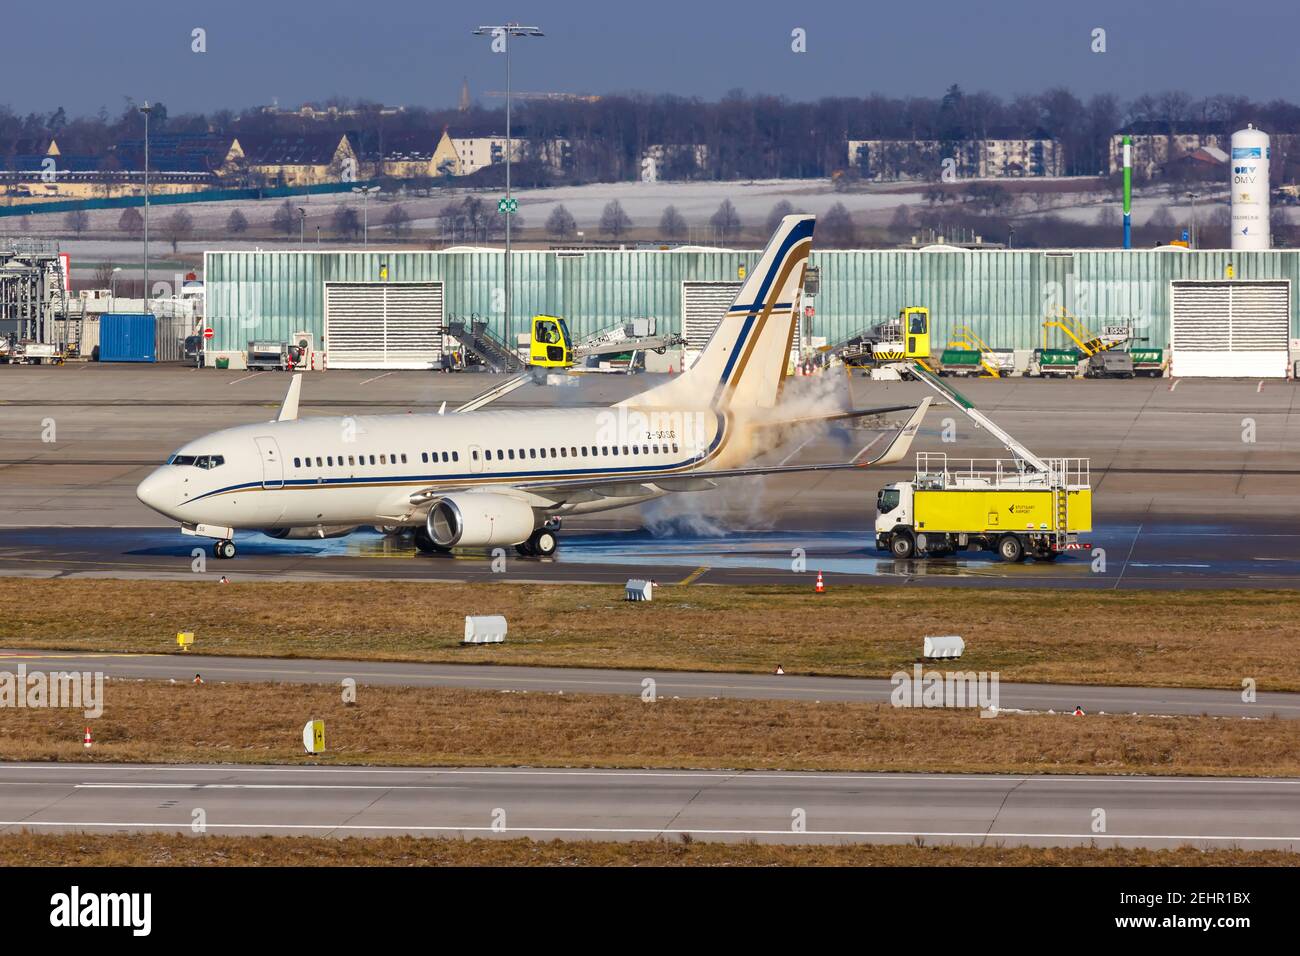 Stuttgart, Germany - January 15, 2021: De-icing of a Gainjet Ireland Boeing 737-700(BBJ) airplane at Stuttgart Airport (STR) in Germany. Stock Photo